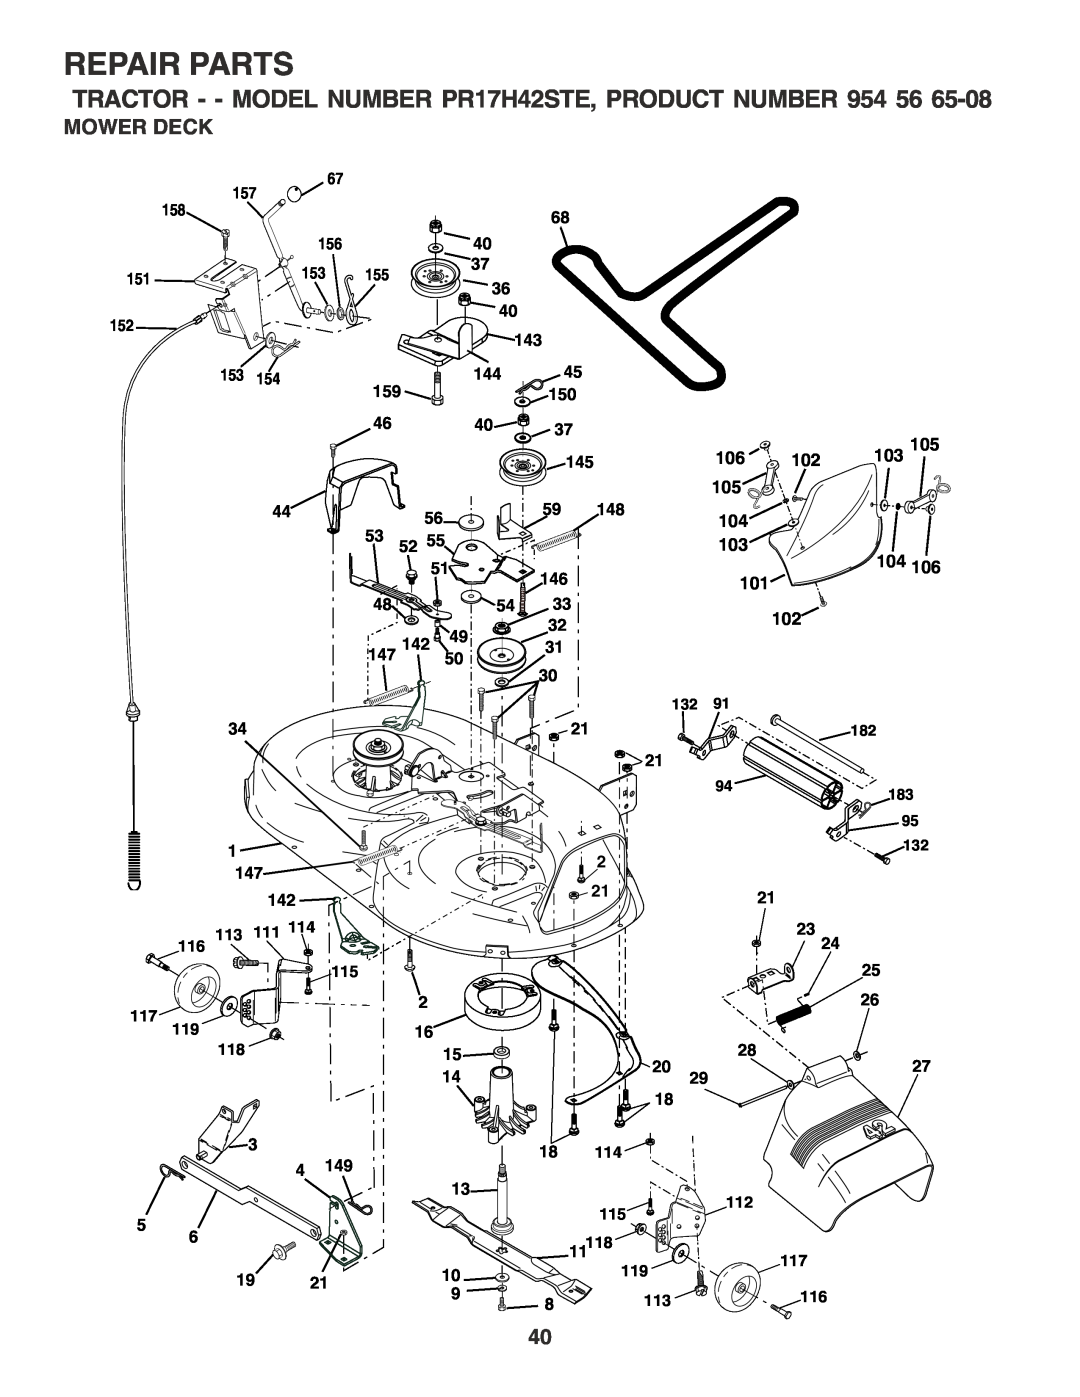 Poulan owner manual Mower Deck, Repair Parts, TRACTOR - - MODEL NUMBER PR17H42STE, PRODUCT NUMBER, 103 